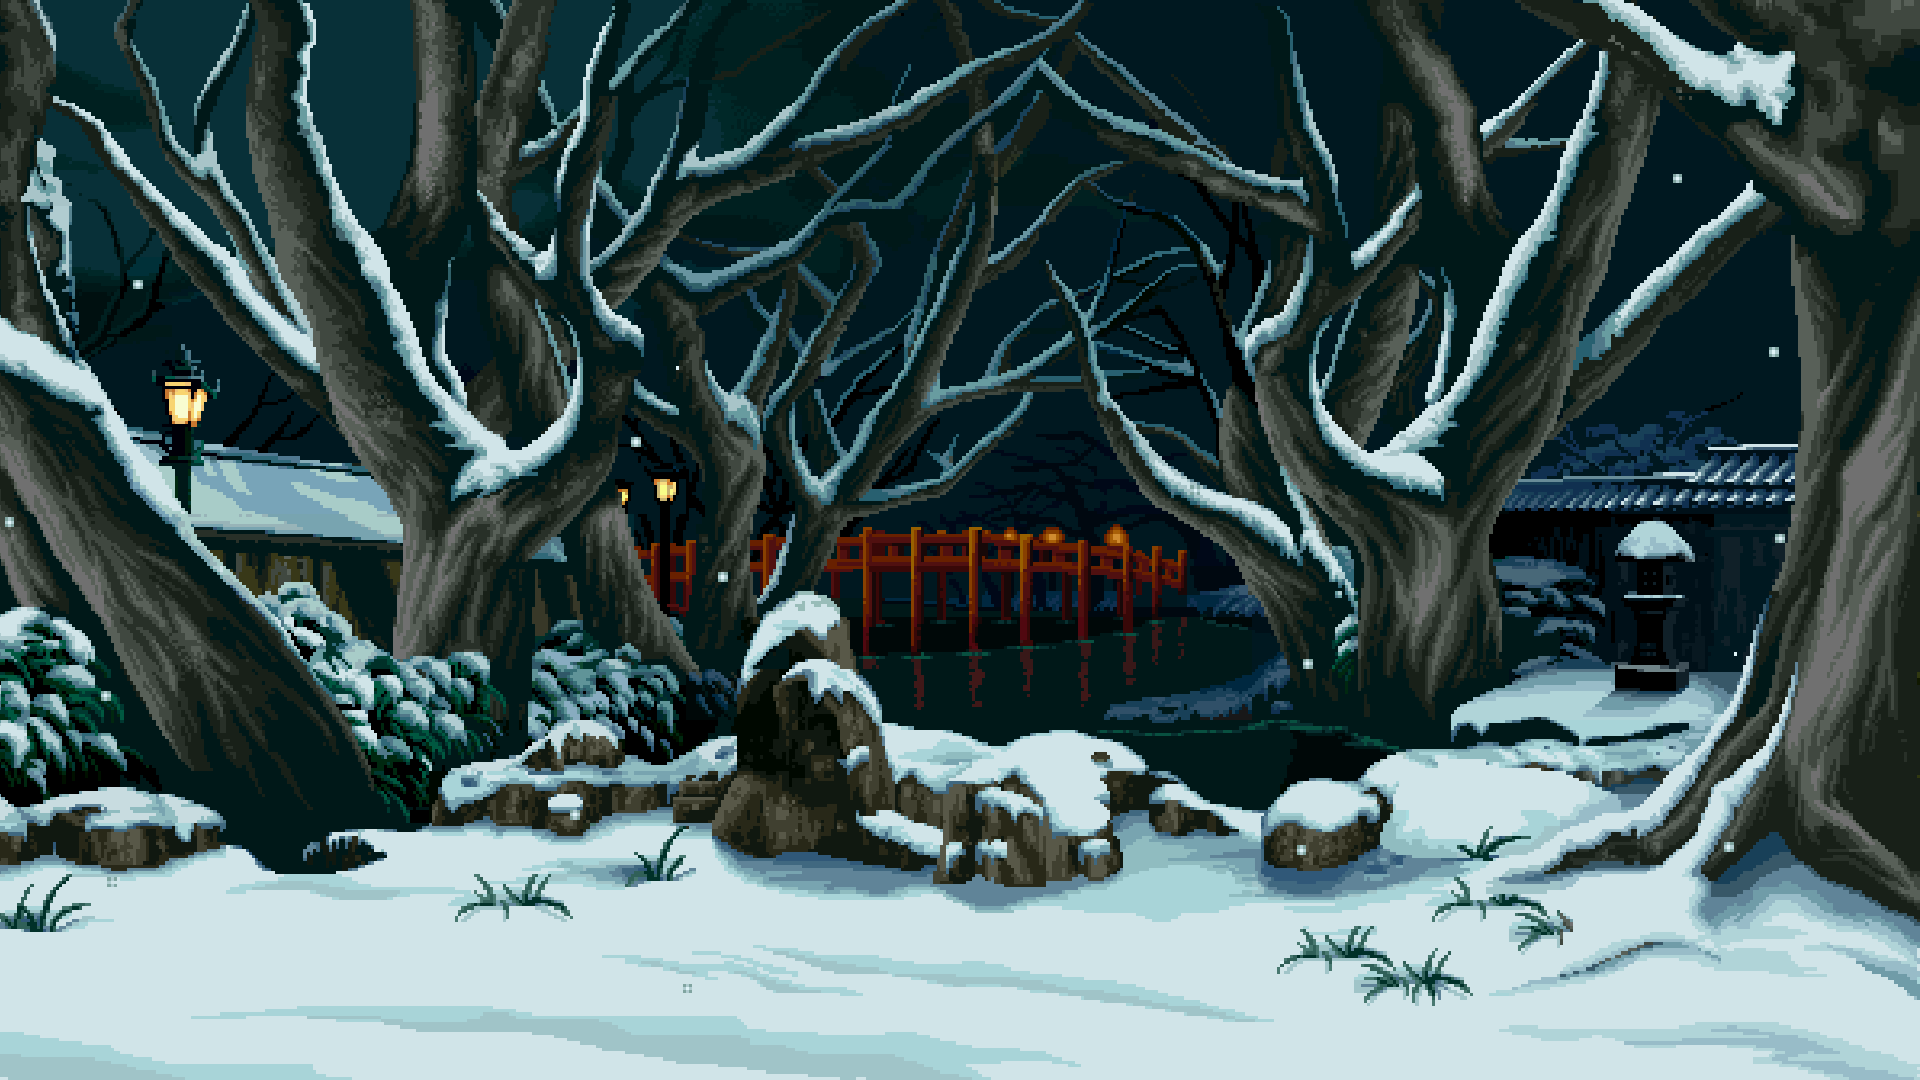 Digital Art Pixel Art Pixelated Pixels Nature Landscape Trees Winter Snow Bridge Stones House Lamp T 1920x1080